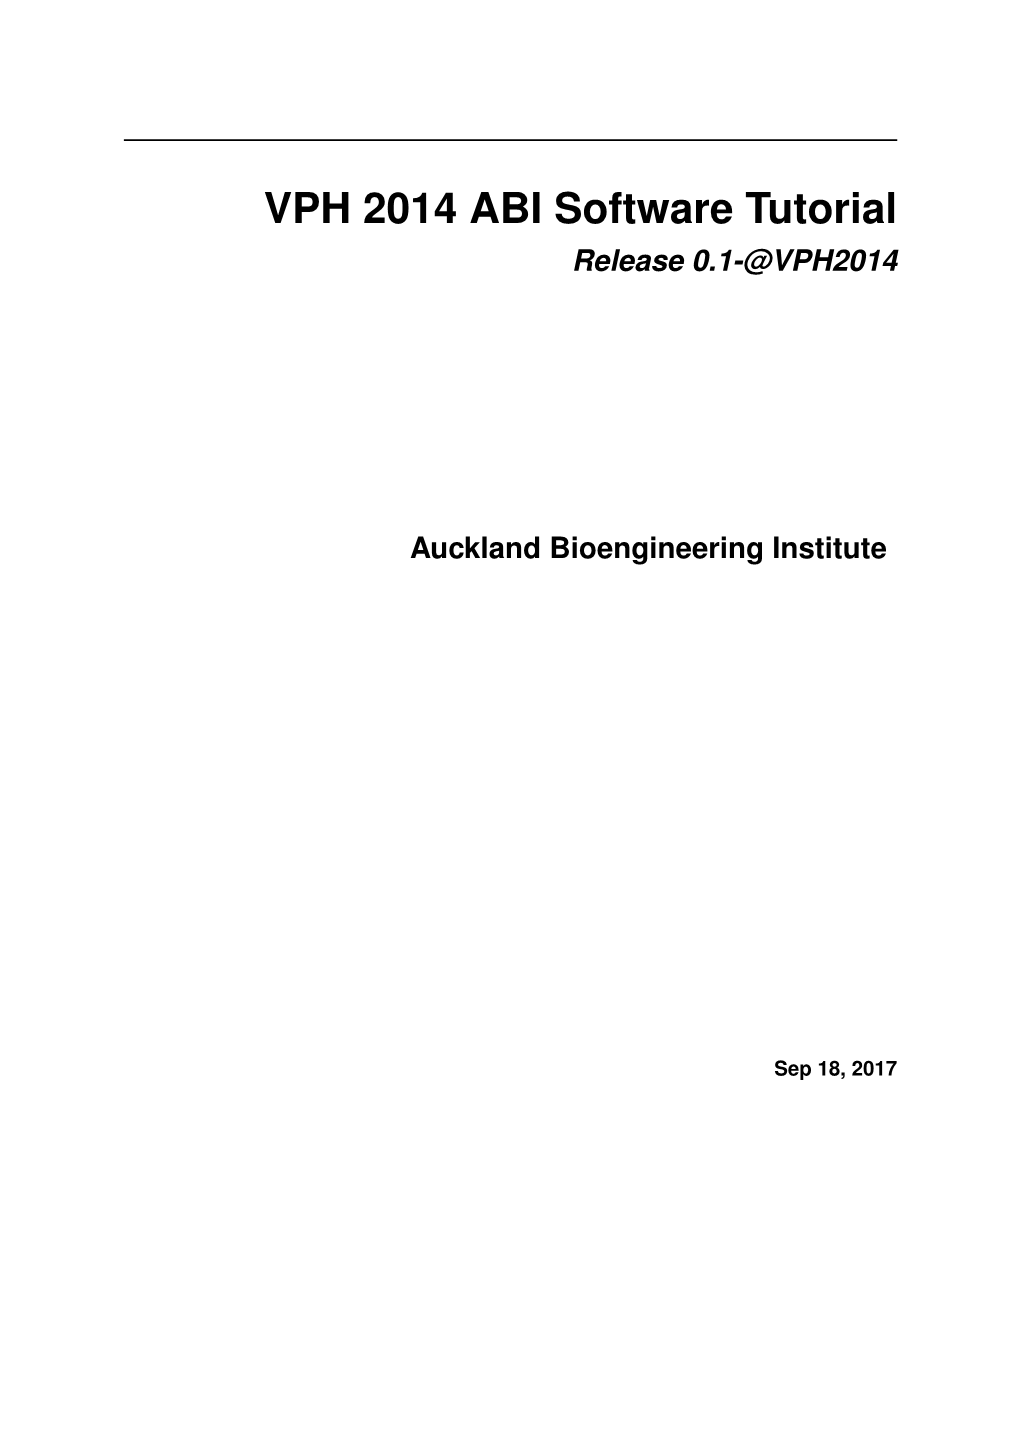 VPH 2014 ABI Software Tutorial Release 0.1-@VPH2014